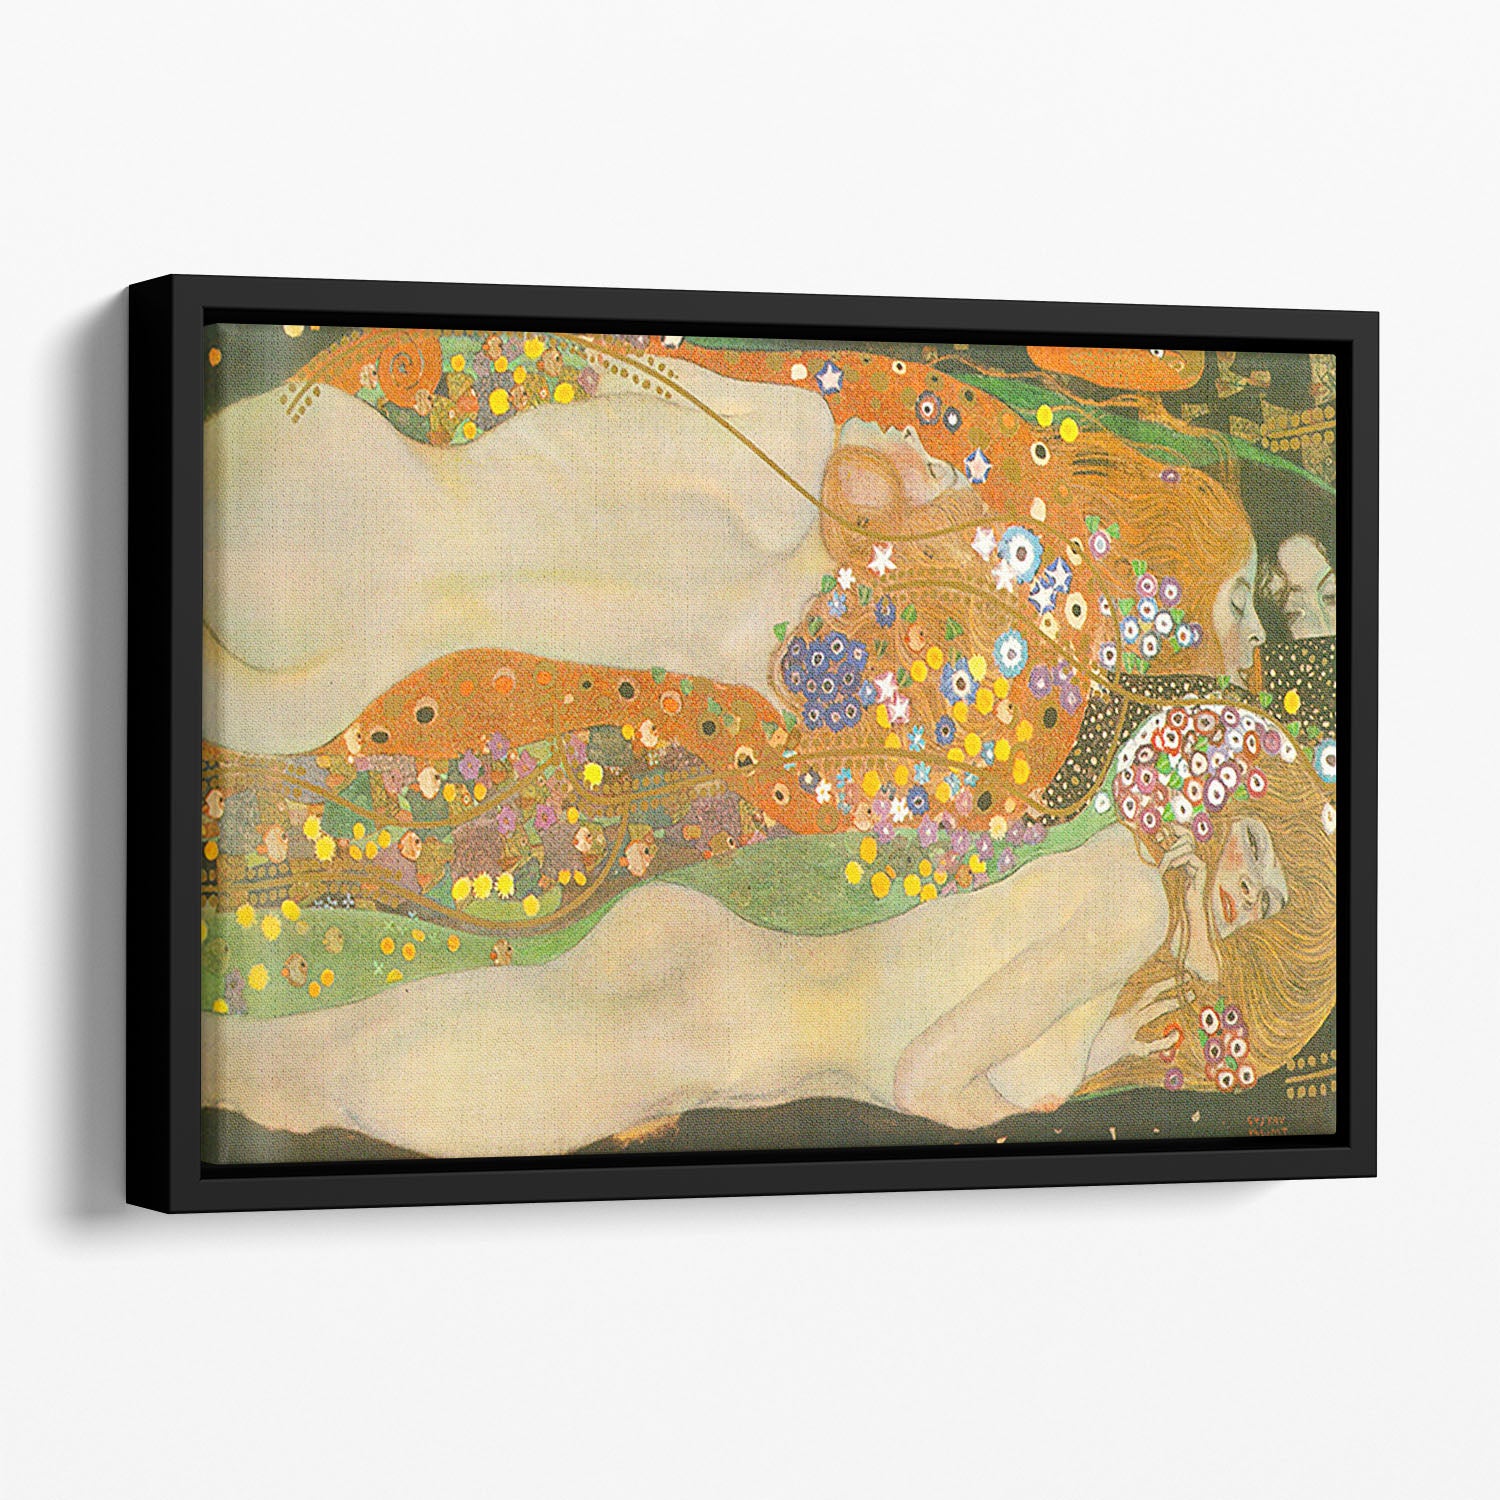 Water snakes friends II by Klimt Floating Framed Canvas